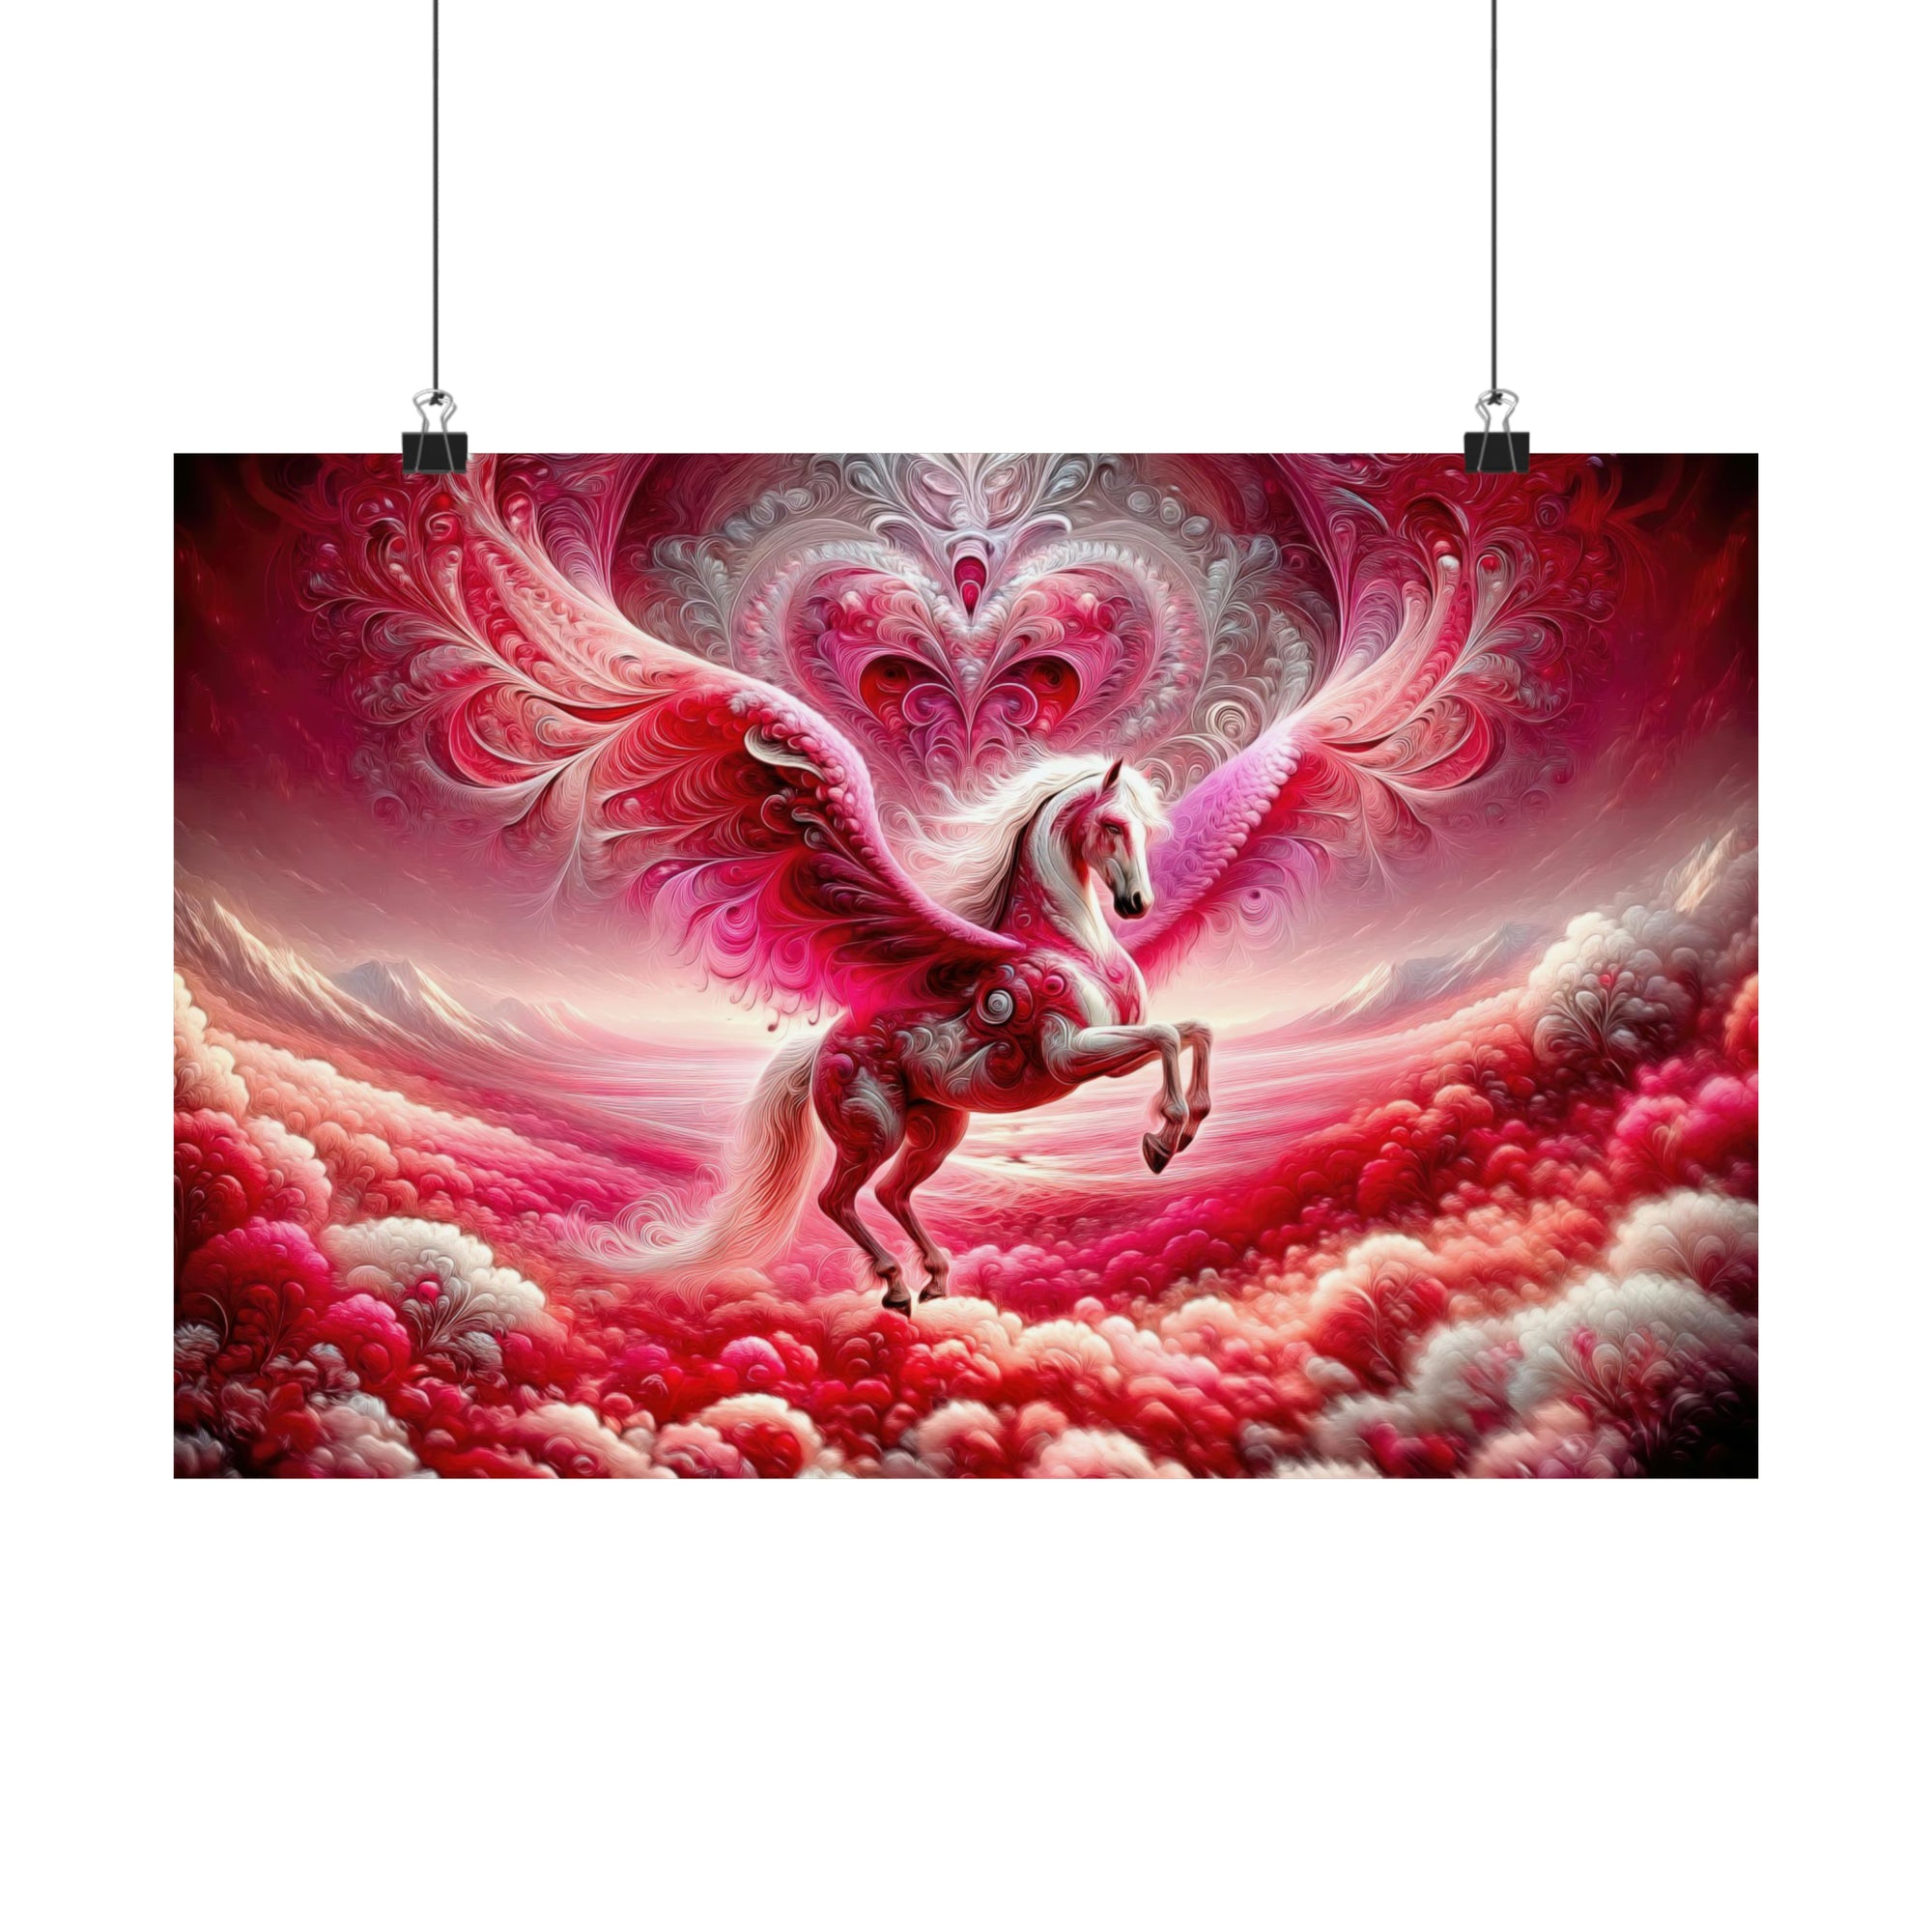 The Crimson Winged Pegasus Poster